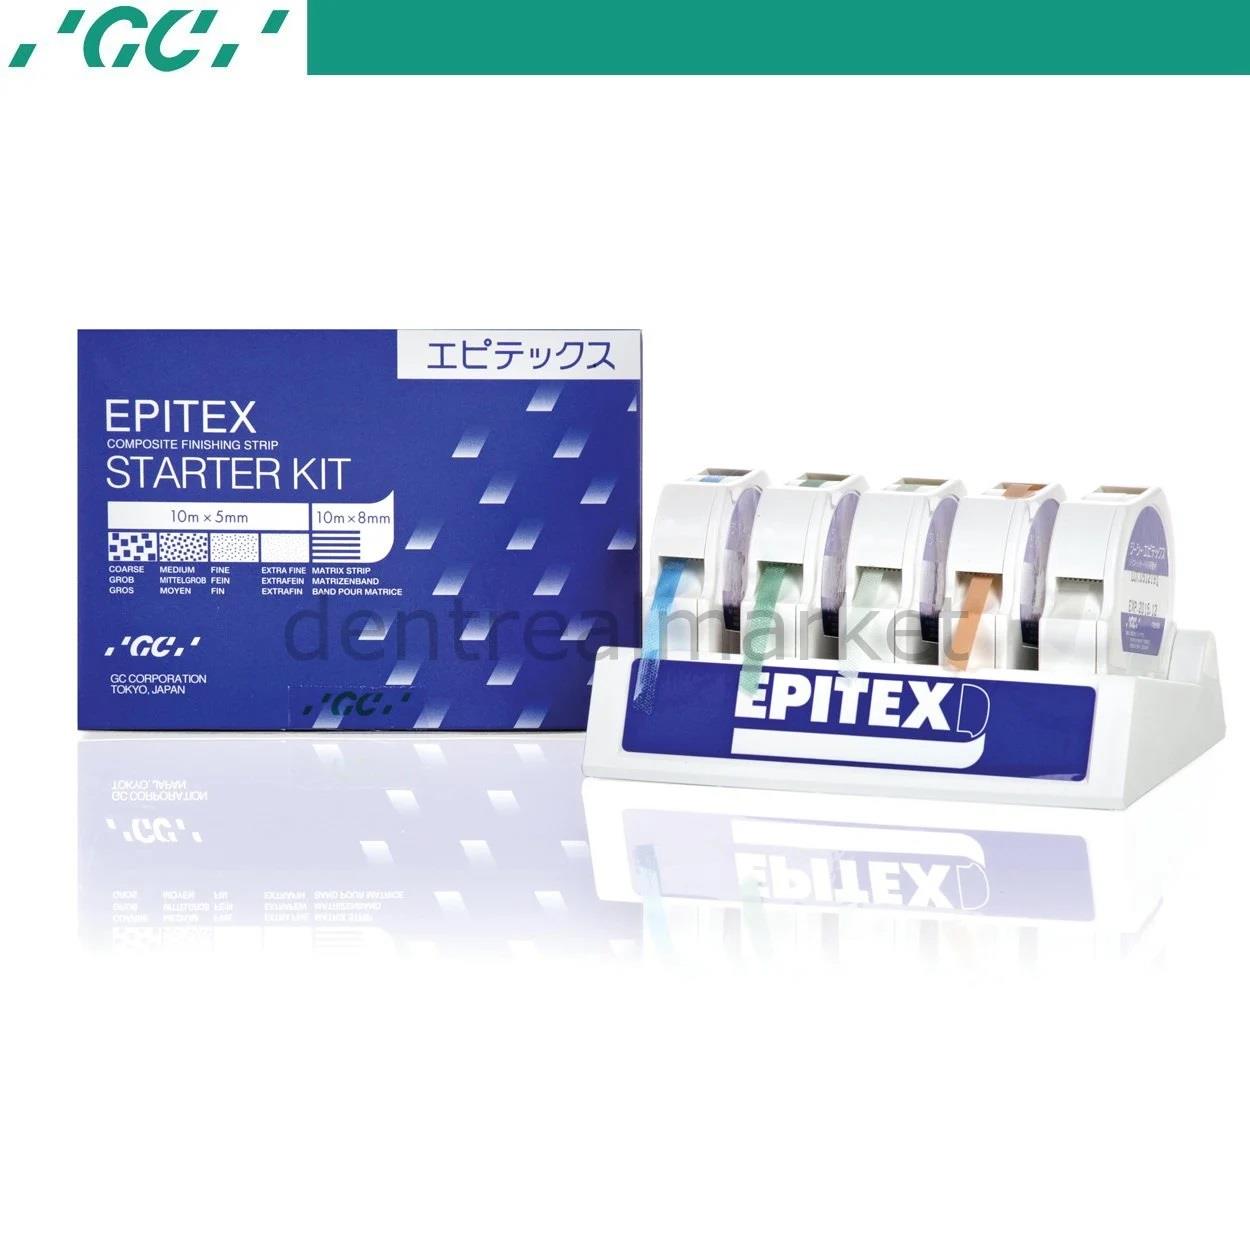 Epitex Strip Starter Kit - Finishing and Polishing Strips